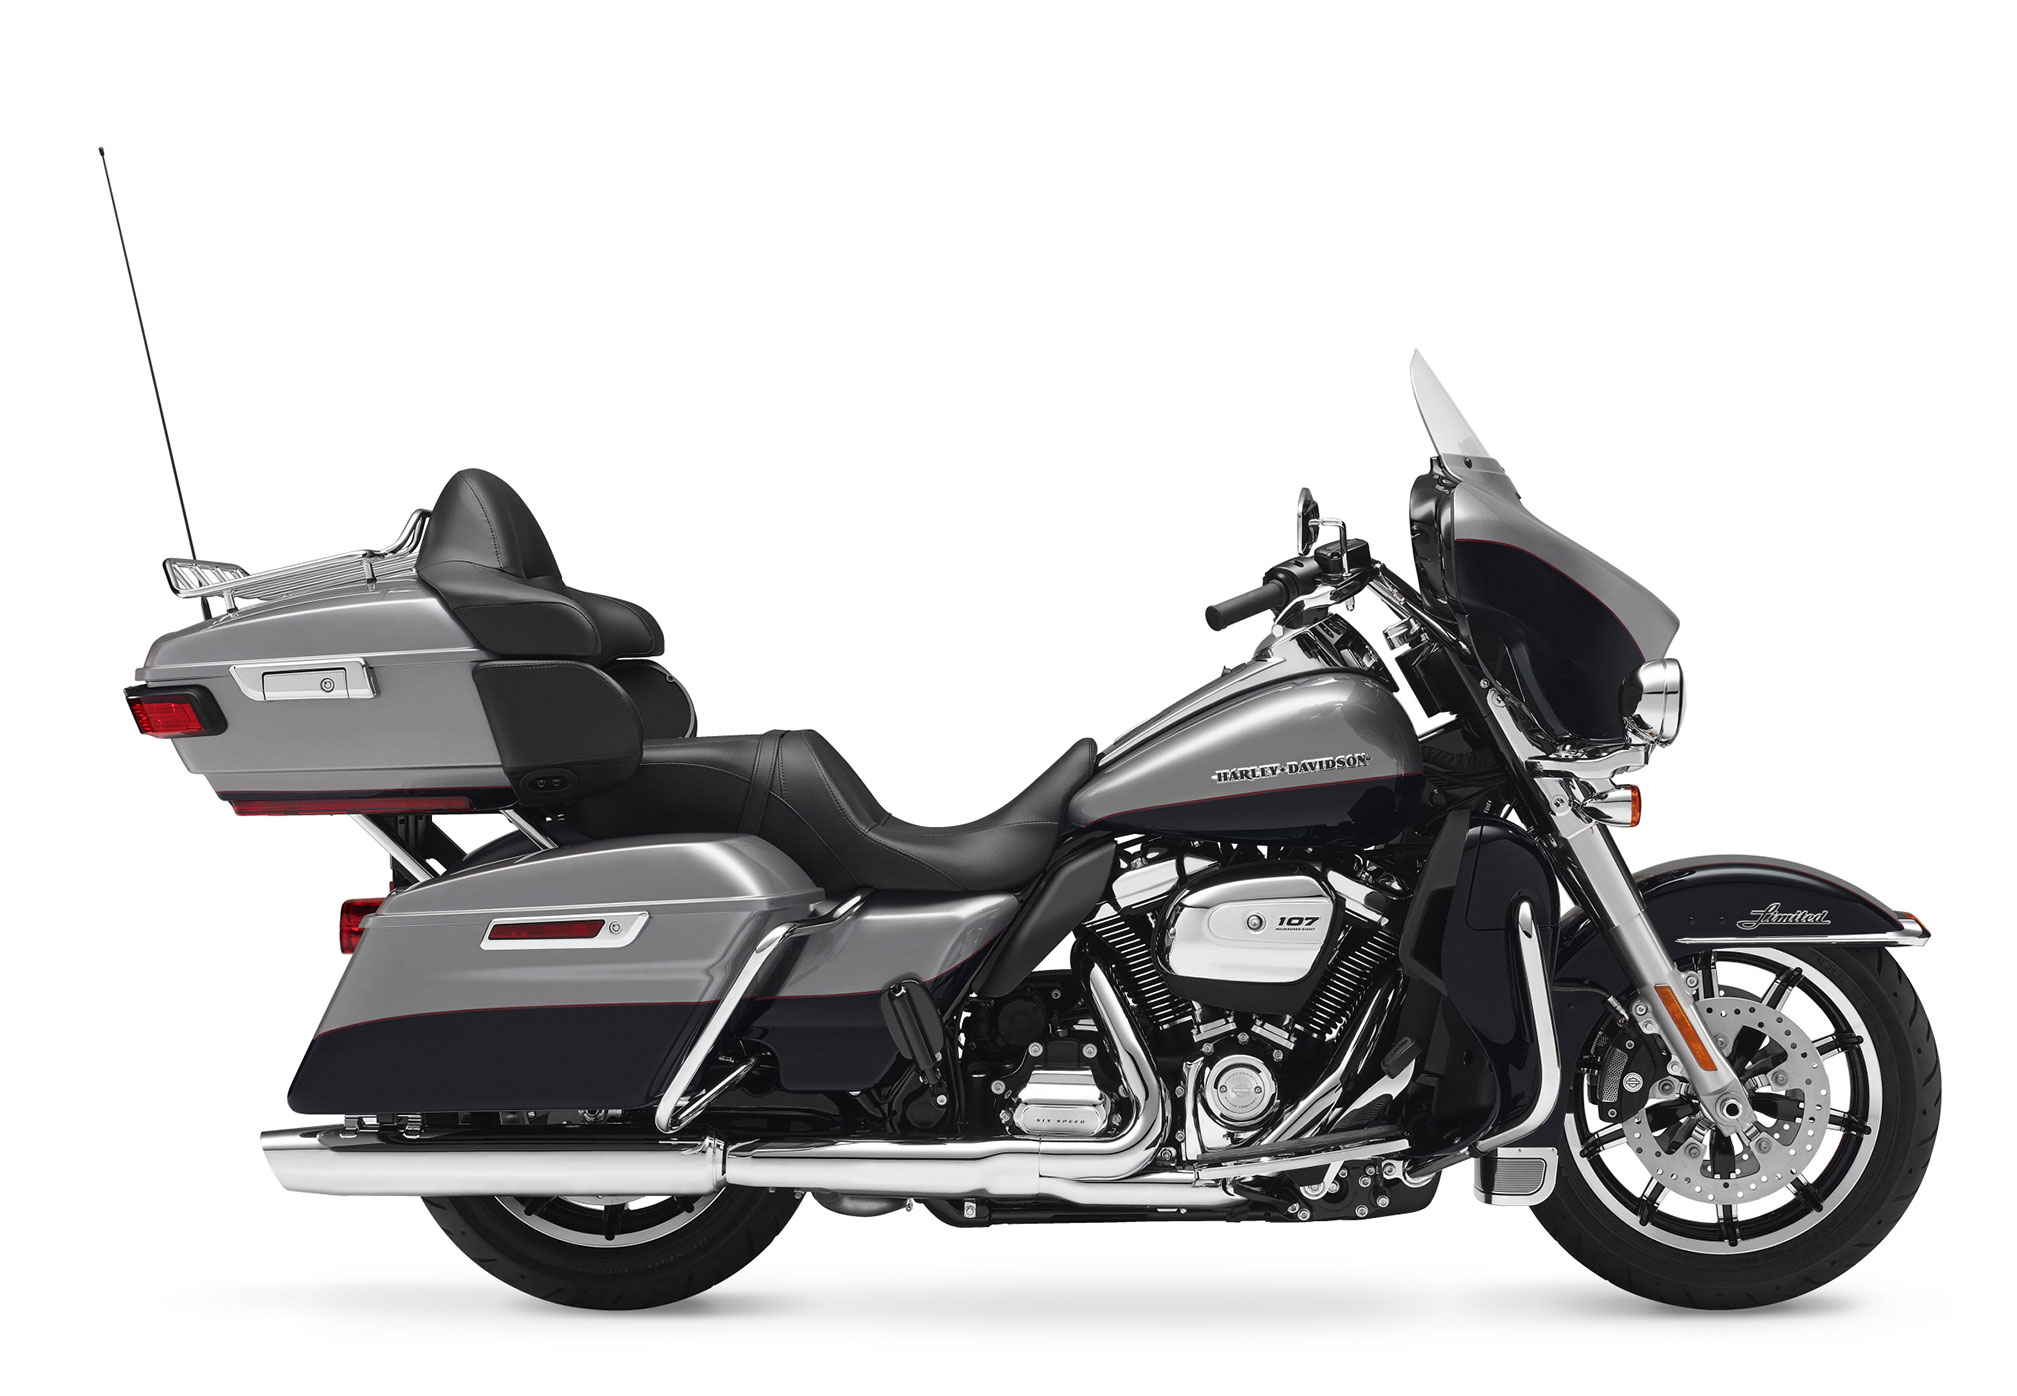 New 2021 Harley Davidson Cvo Street Glide Hdpo123459575 Ridenow Powersports